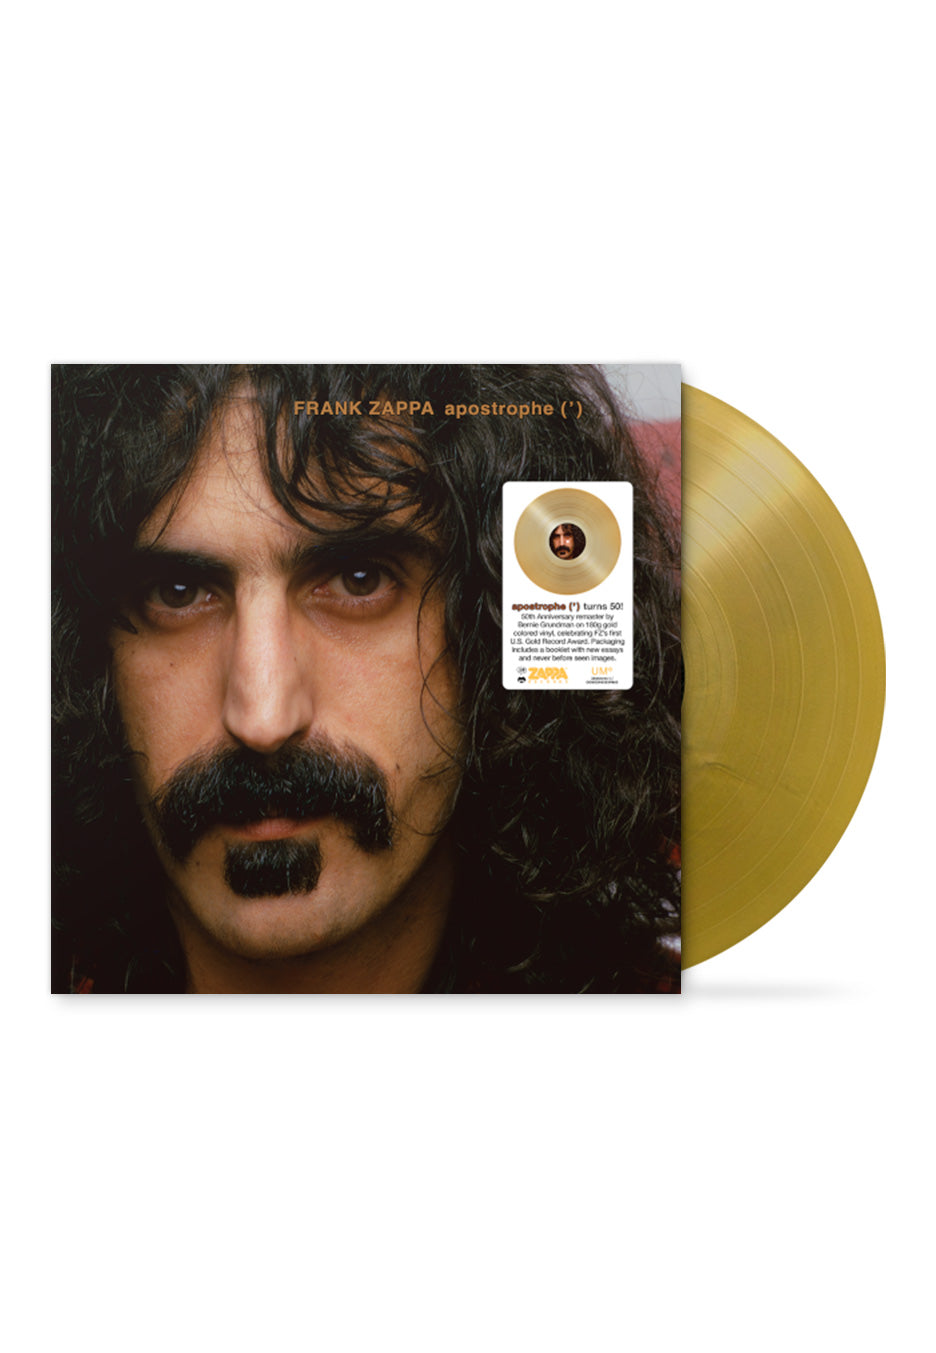 Frank Zappa - Apostrophe (') Ltd. Gold Nugget - Colored Vinyl | Neutral-Image